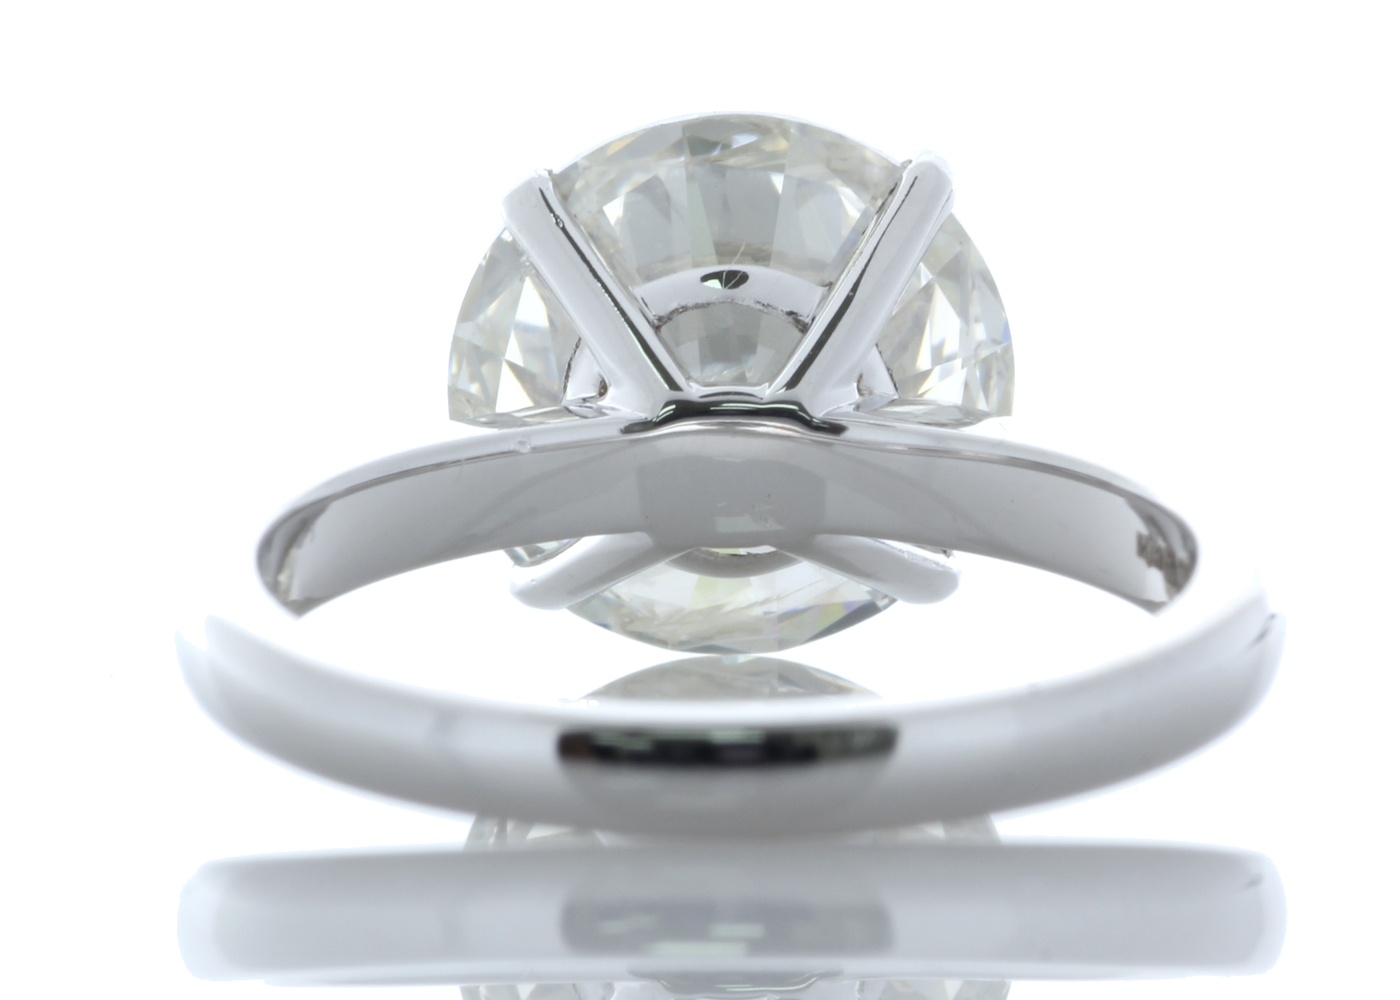 18ct White Gold Single Stone Prong Set Diamond Ring 5.07 Carats - Image 5 of 6